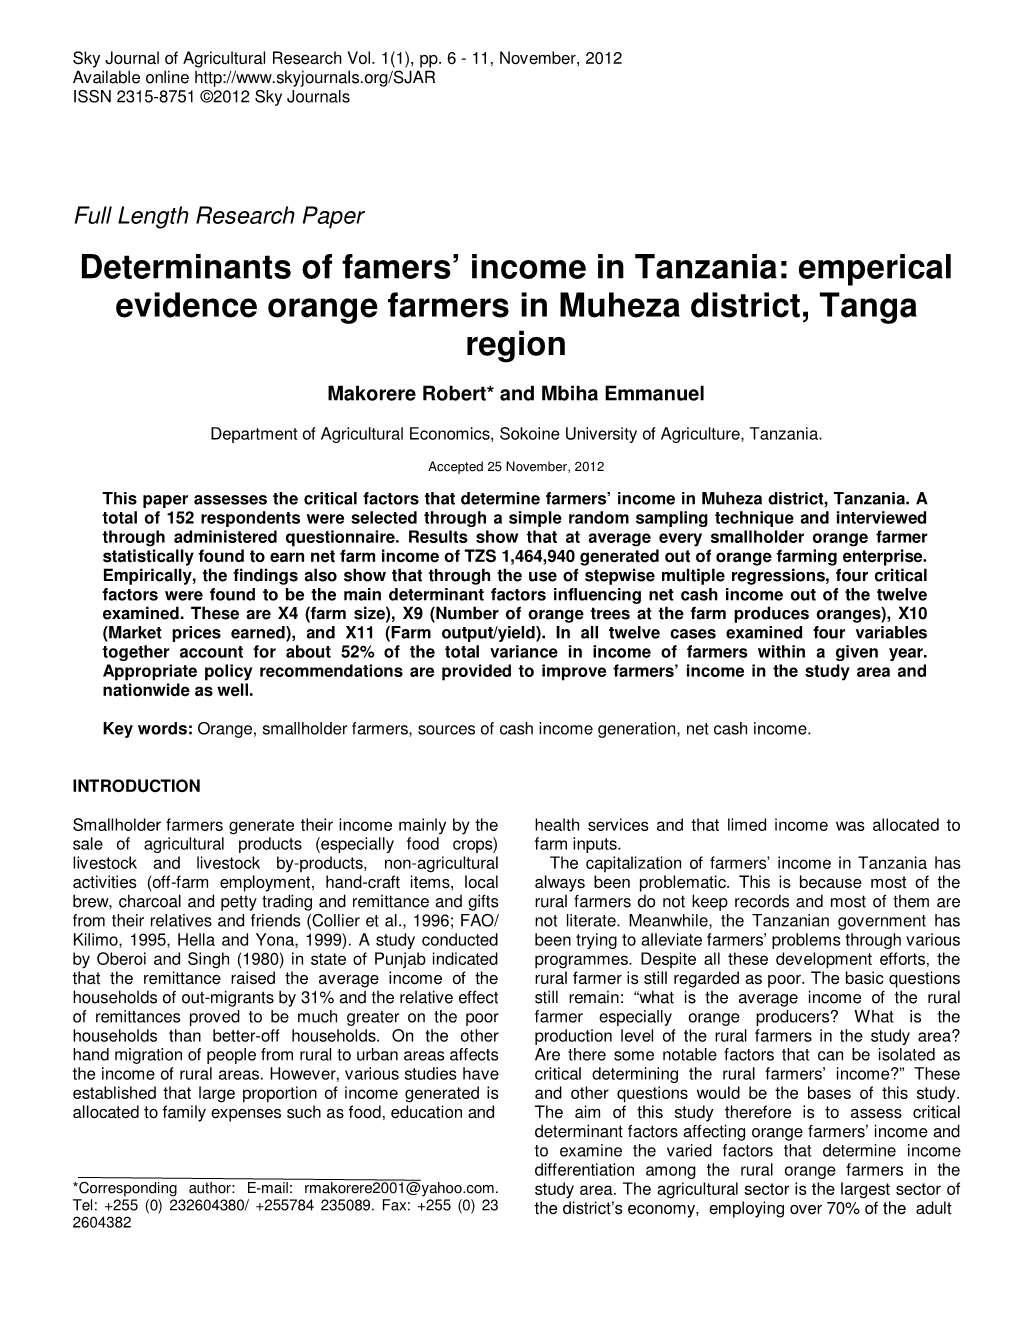 Emperical Evidence Orange Farmers in Muheza District, Tanga Region